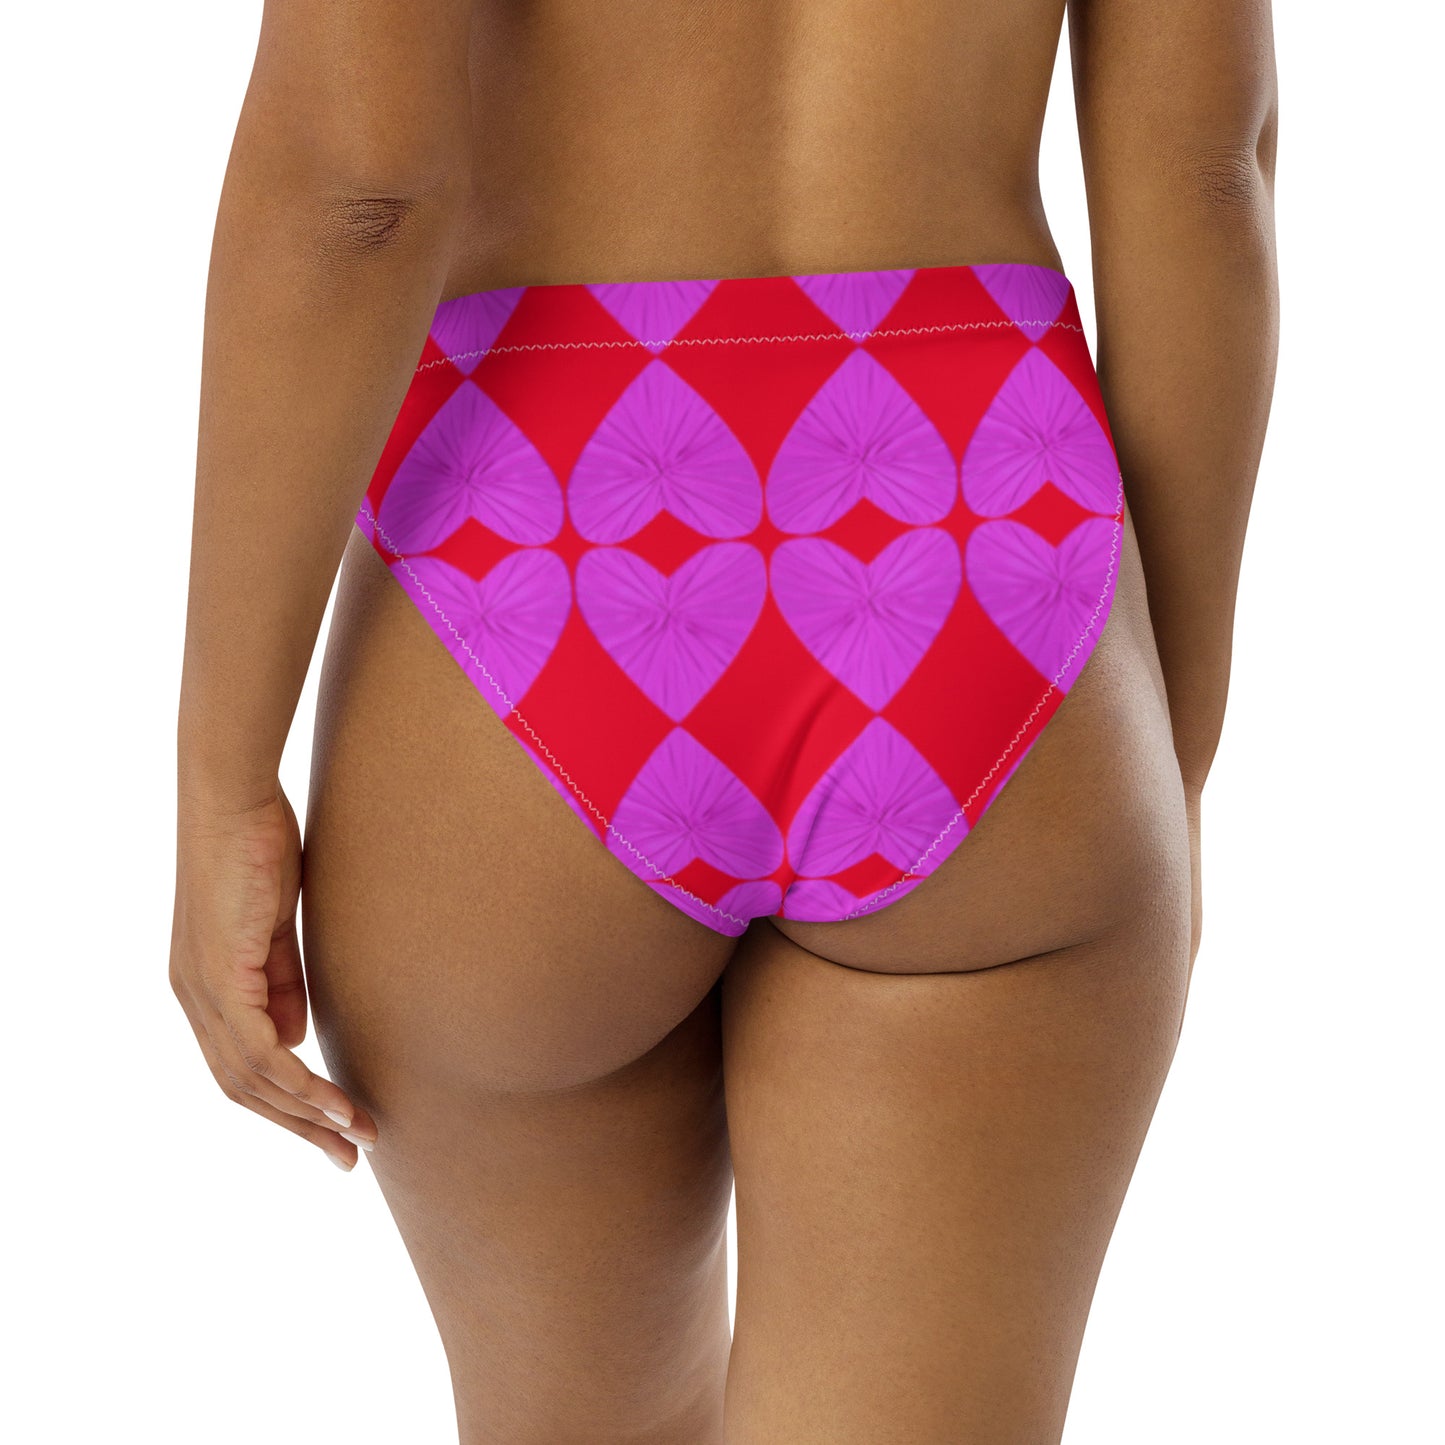 Harlequin Hearts Lilac and Red High-Waisted Bikini Bottom